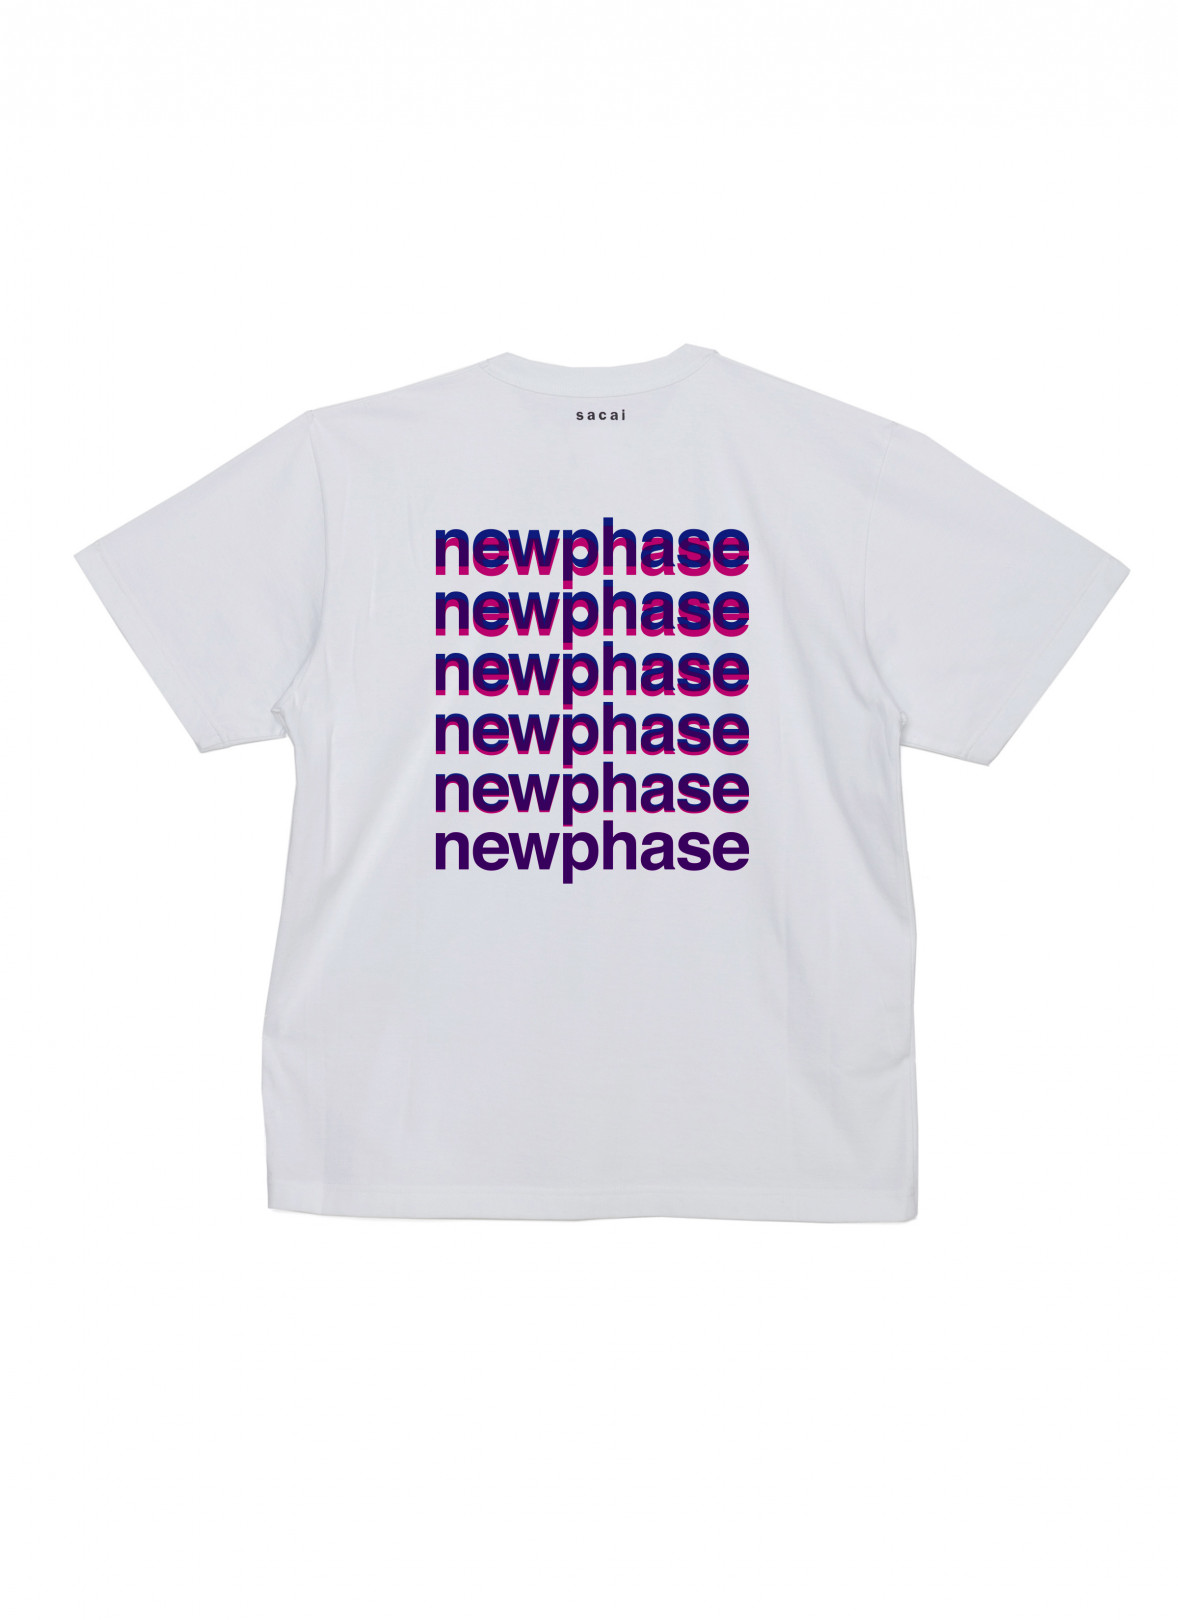 New Phase T-shirts (受注販売) Price: Adult 1万3,000円 / Kids 8,000円